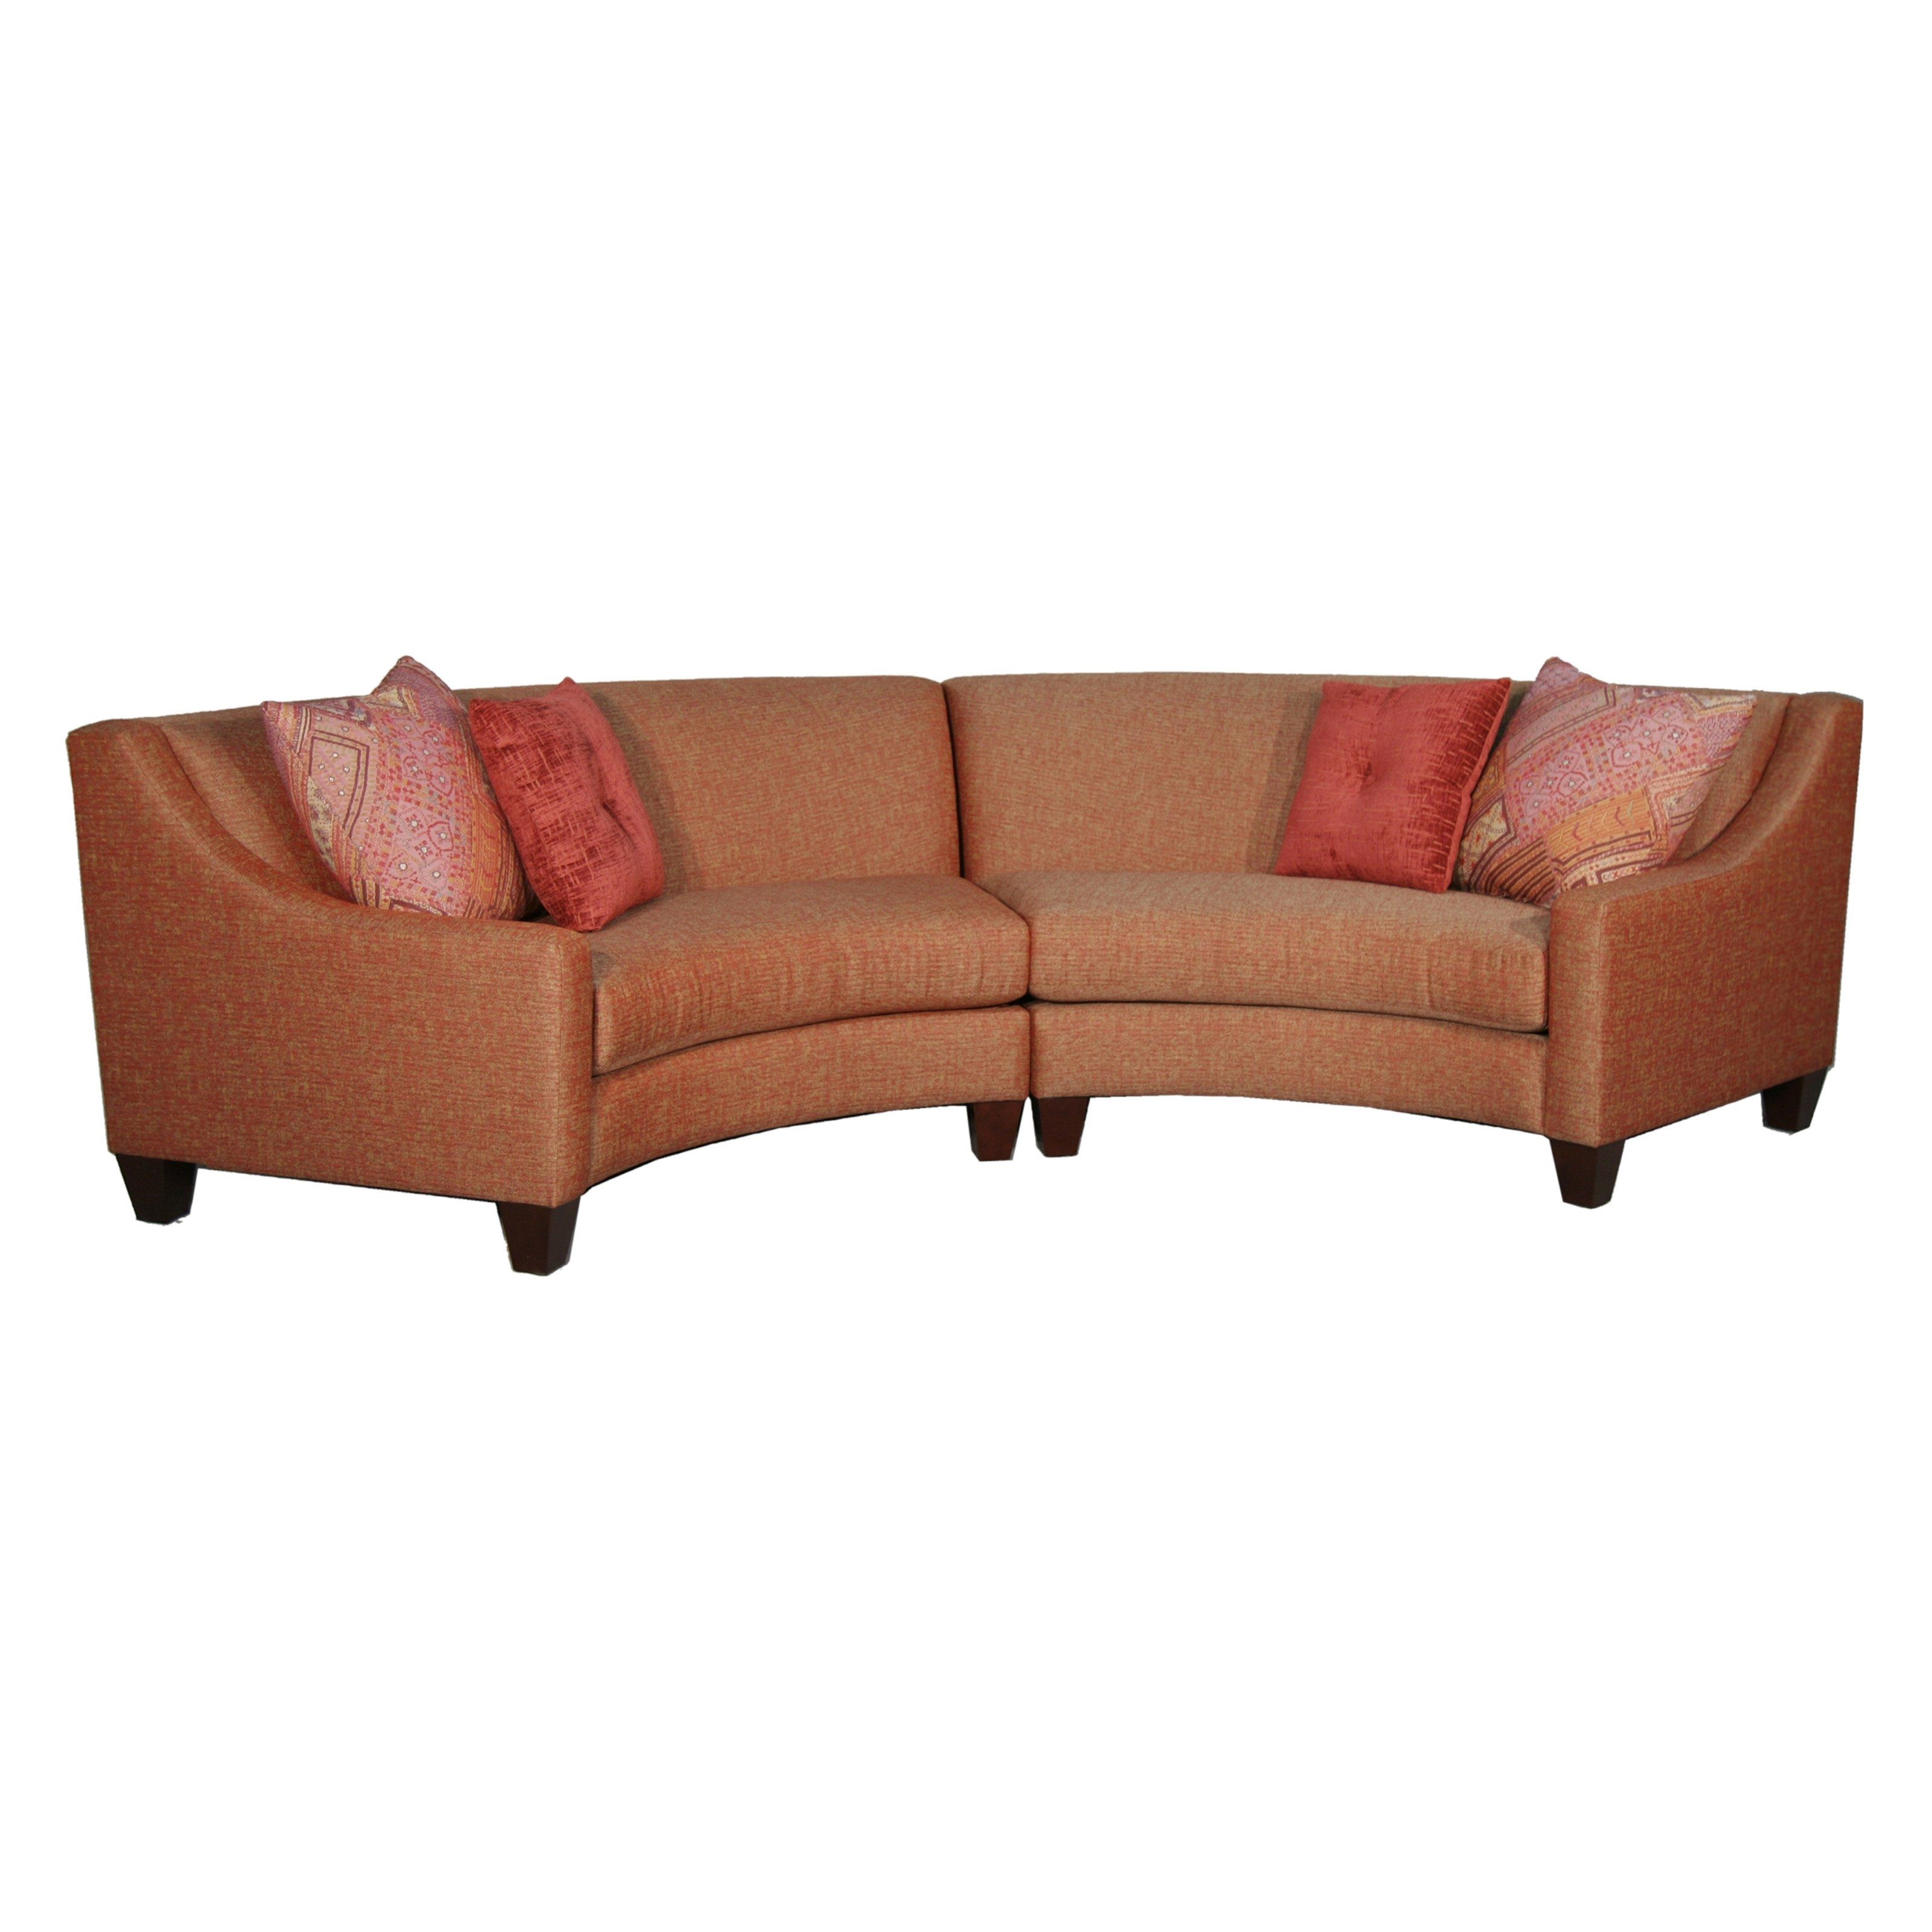 Fairmont Designs Aurora 2 Piece Sectional Sofa – Walmart Inside Aurora 2 Piece Sectionals (View 11 of 30)